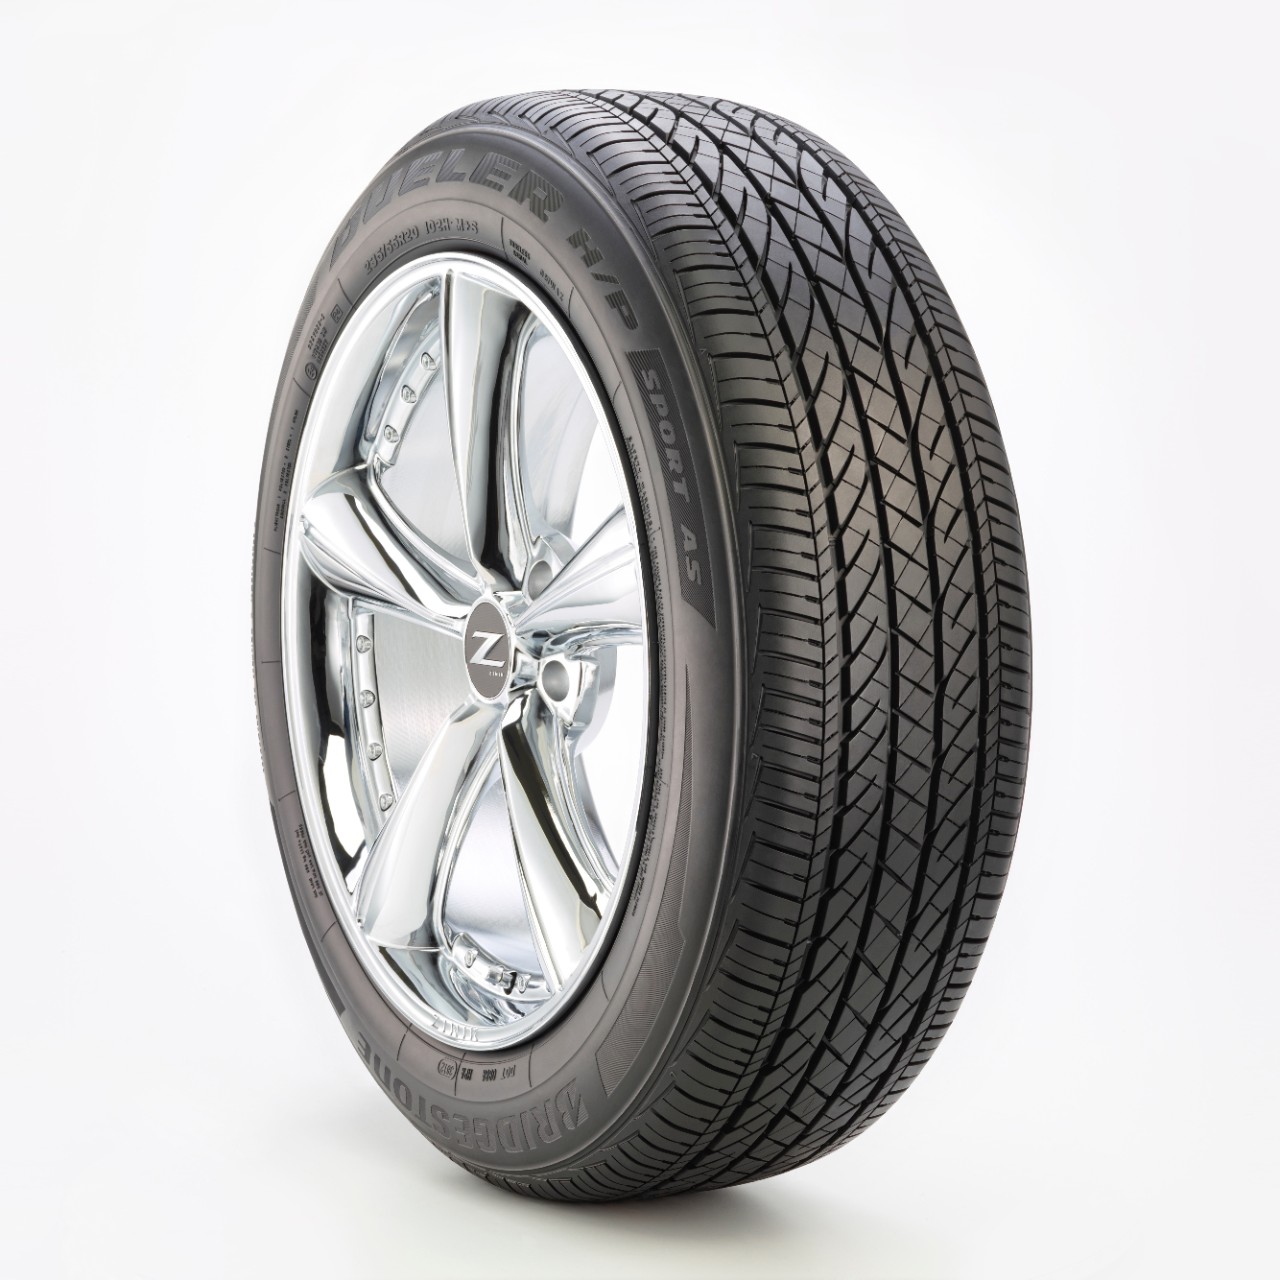 Gomme Nuove Bridgestone 215/60 R17 96H DHP AS M+S pneumatici nuovi Estivo